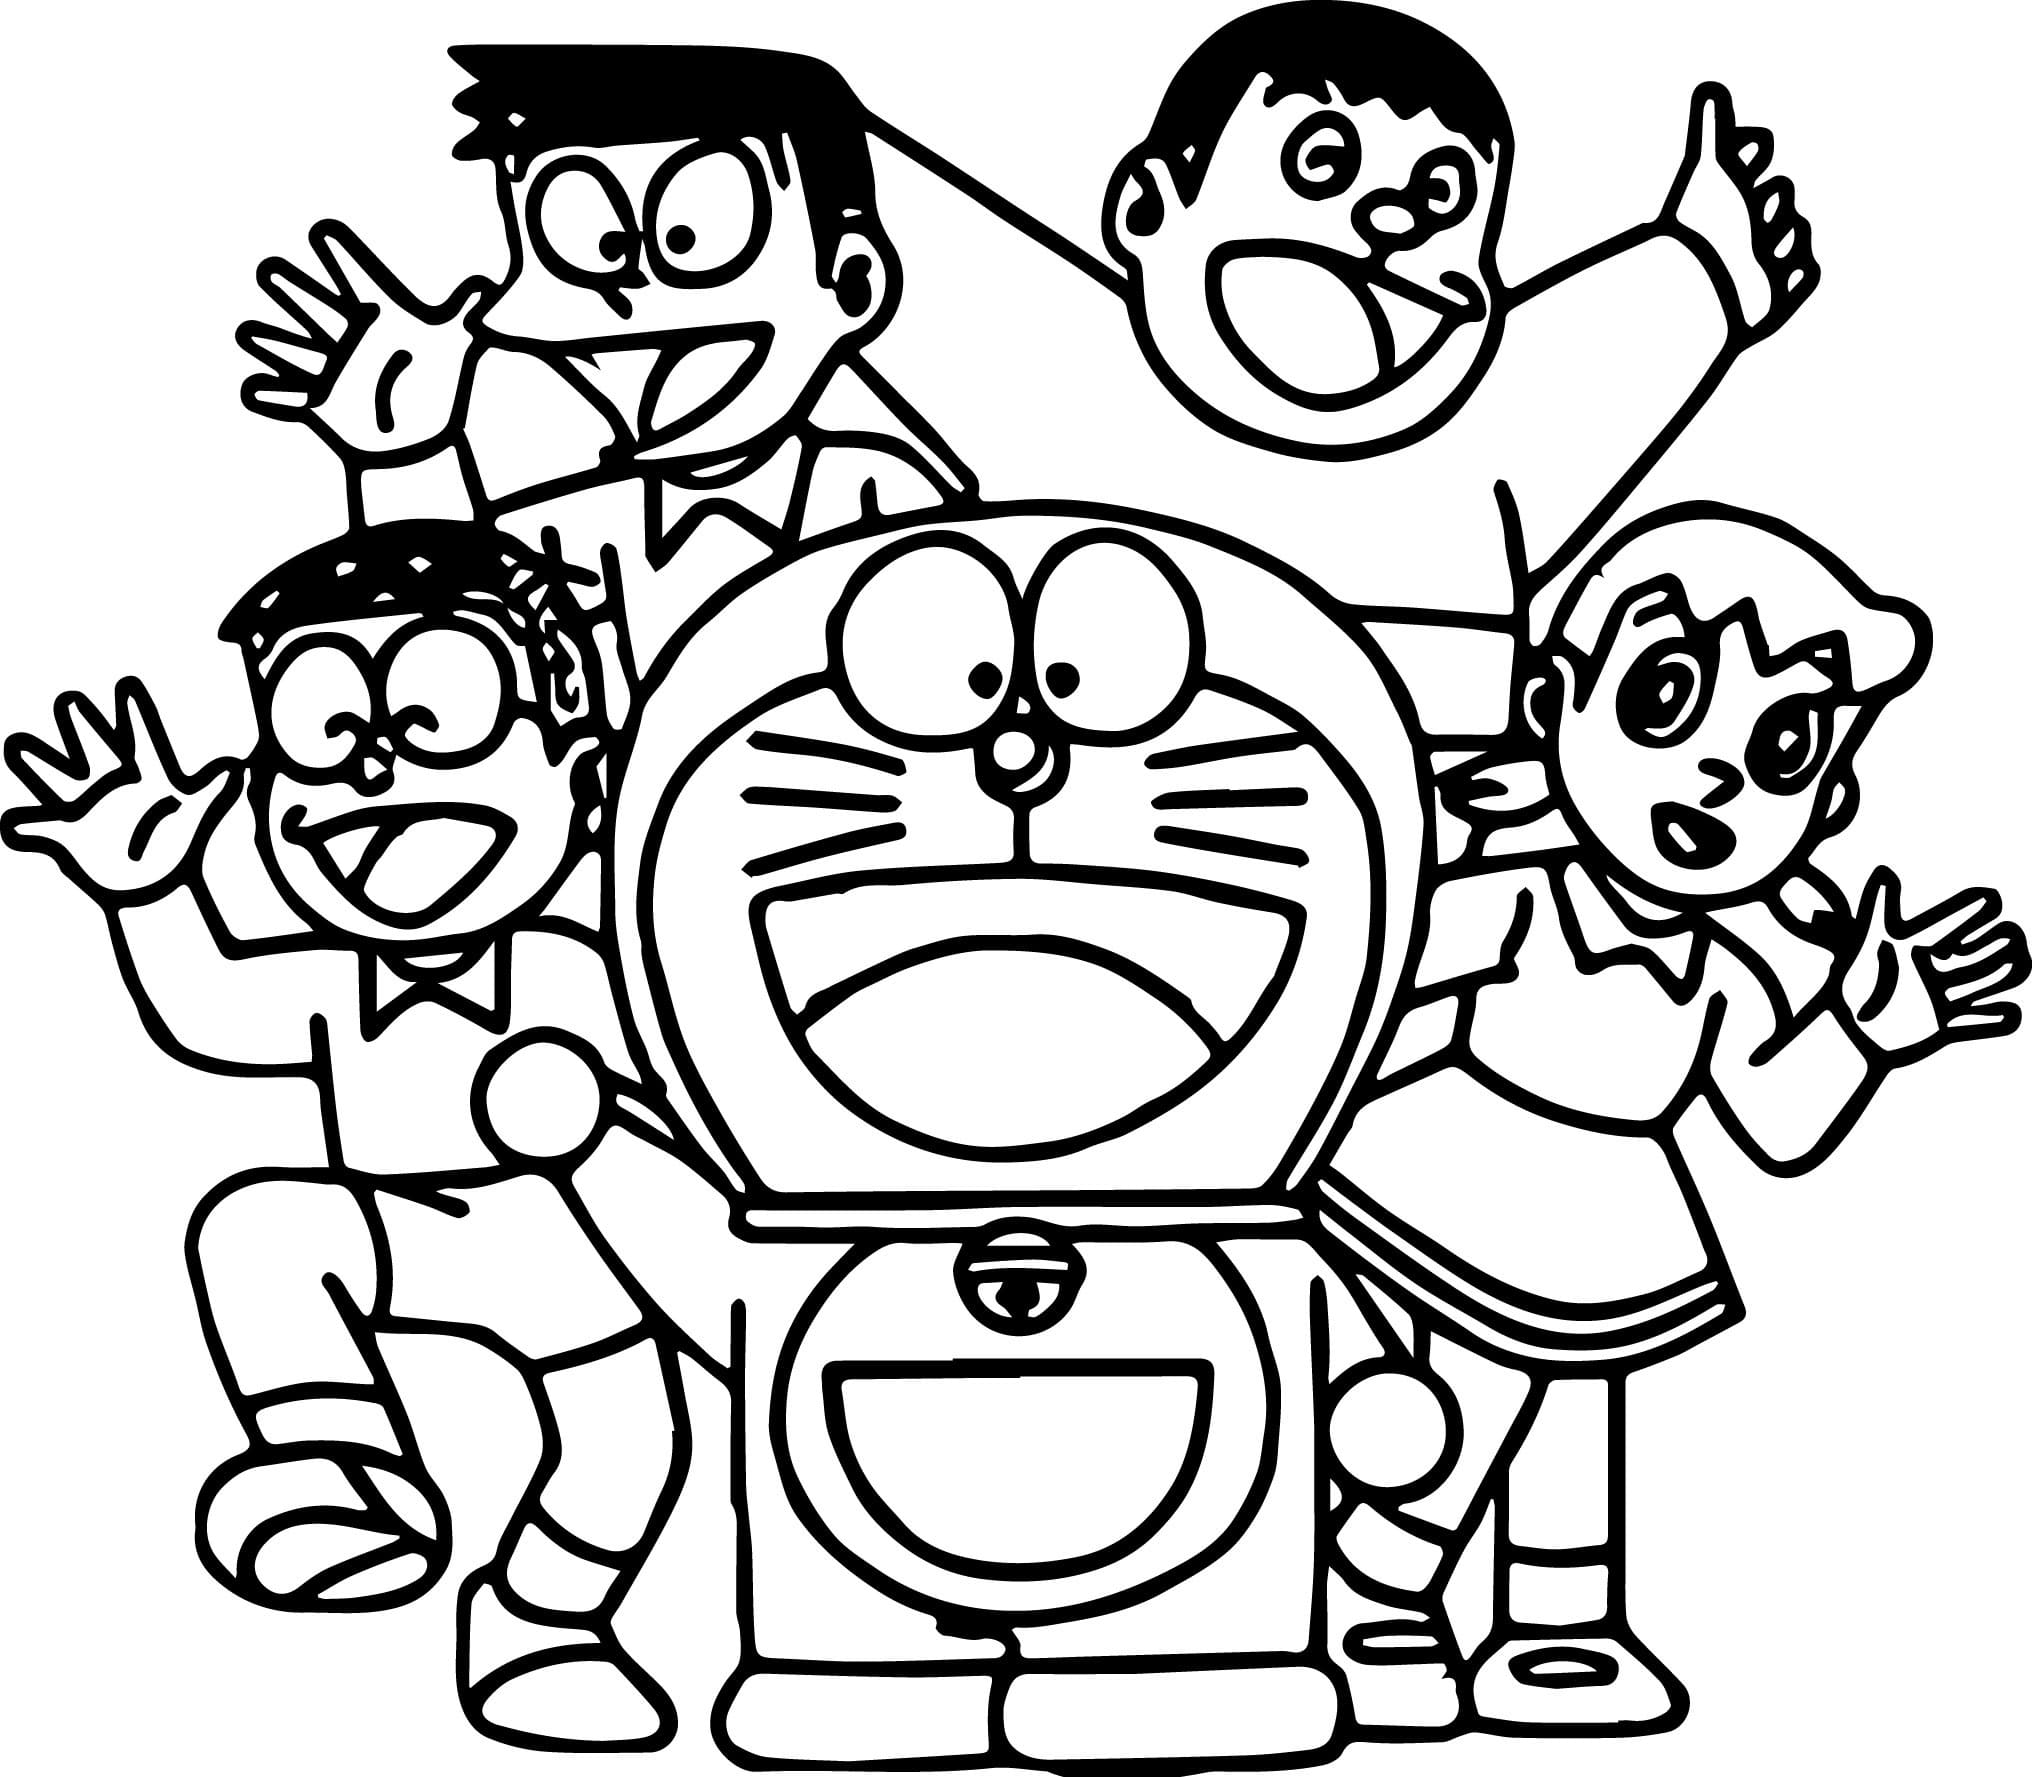 Doraemon Coloring Pages - GetColoringPages.com